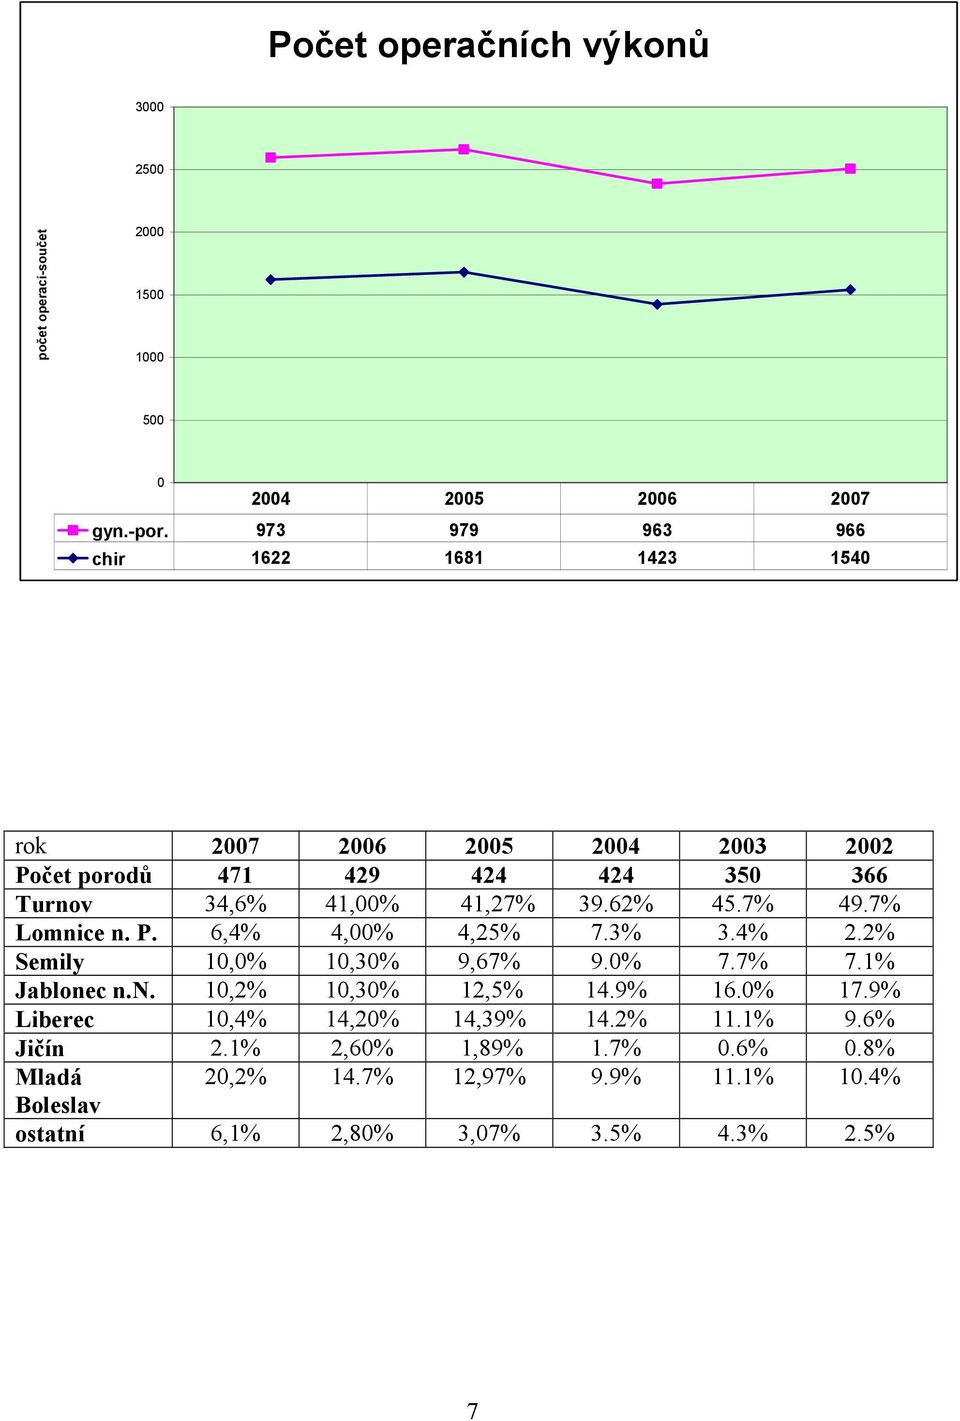 62% 45.7% 49.7% Lomnice n. P. 6,4% 4,00% 4,25% 7.3% 3.4% 2.2% Semily 10,0% 10,30% 9,67% 9.0% 7.7% 7.1% Jablonec n.. 10,2% 10,30% 12,5% 14.9% 16.